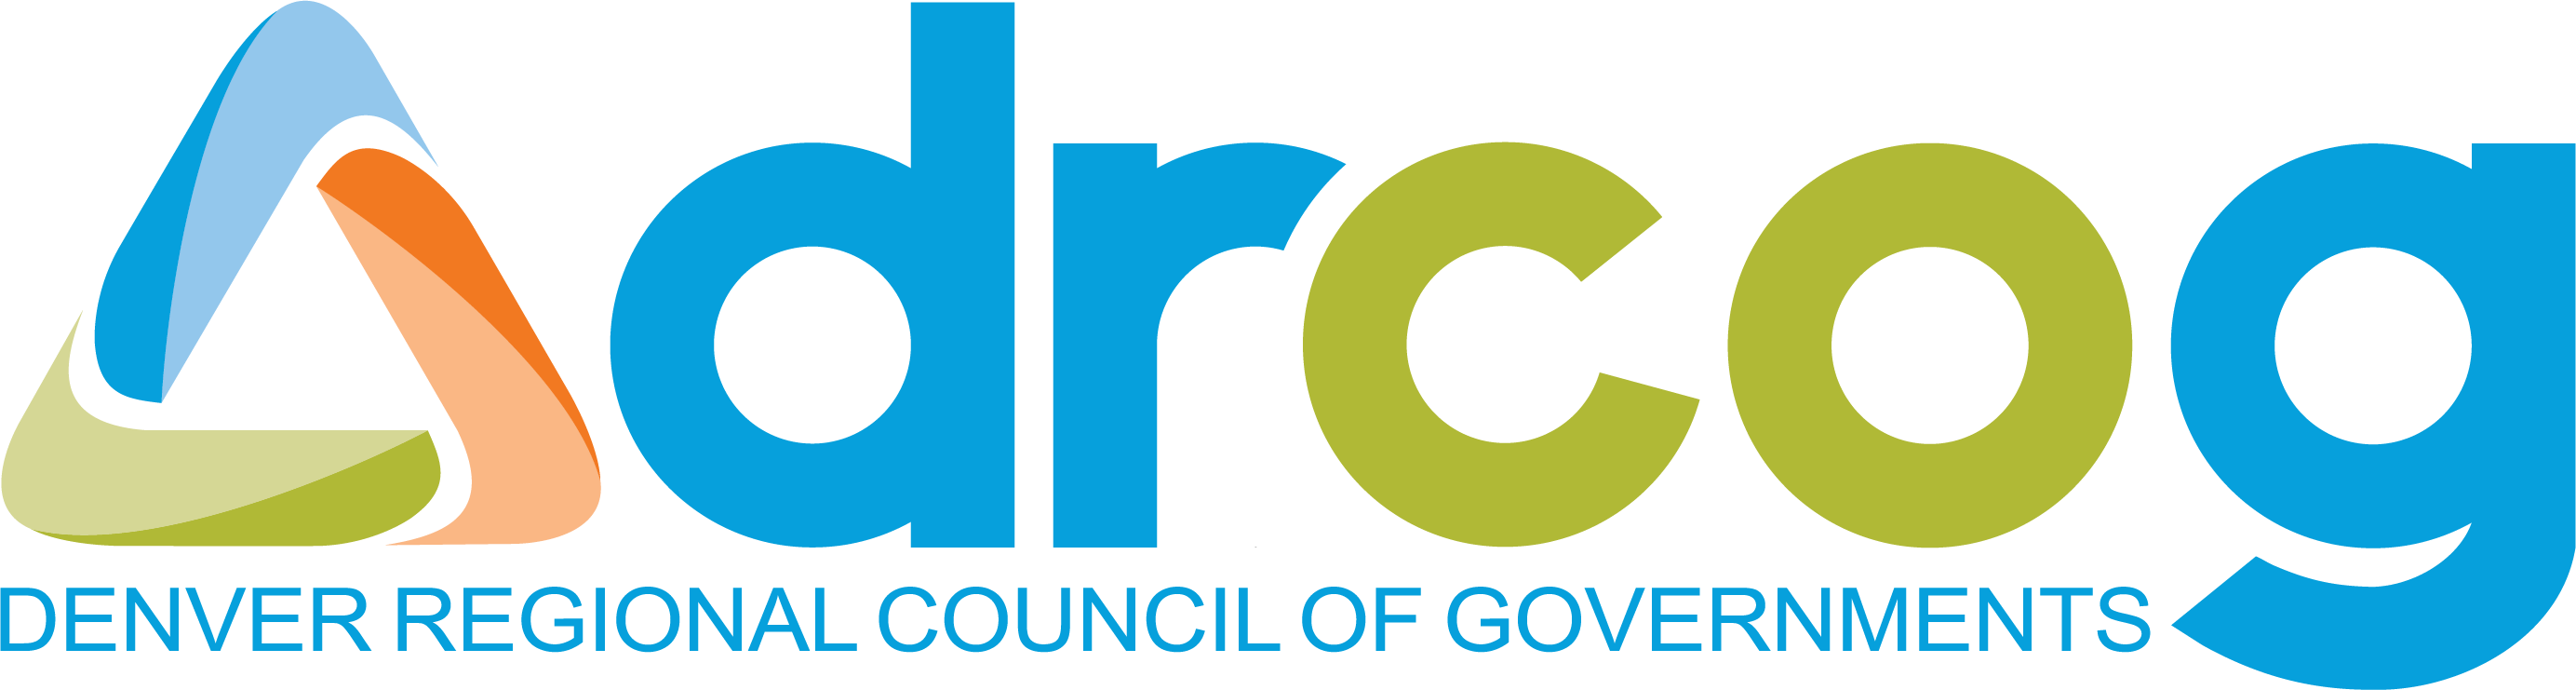 2016-DRCOG-Logo-PMS-1small.png detail image